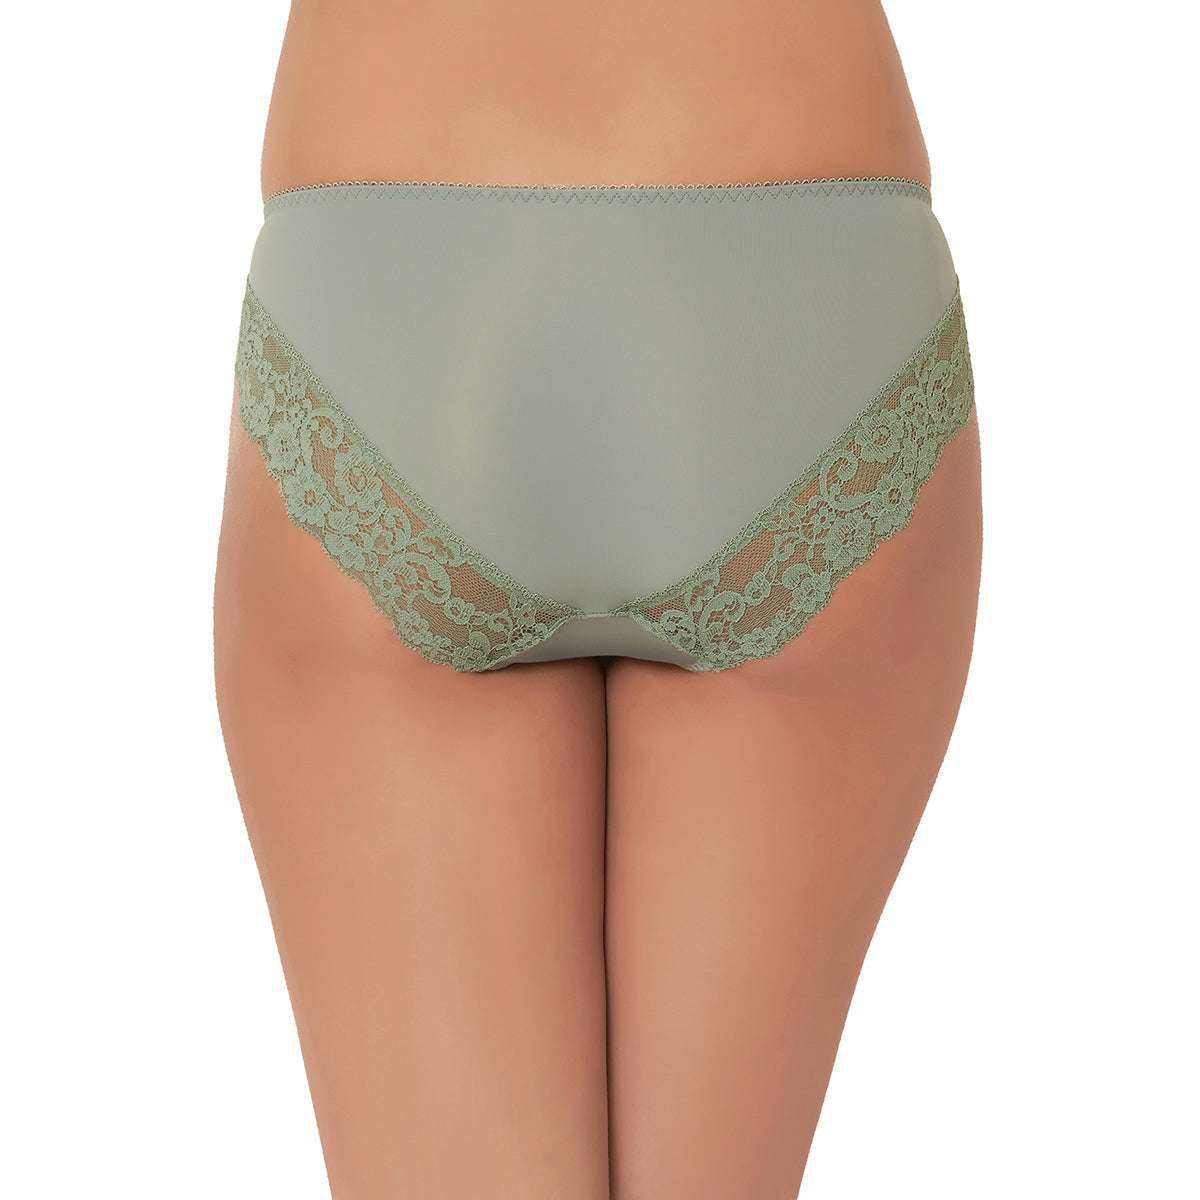 Buy Bragenic Low Waist Medium Coverage Lacy Panty - Green Online